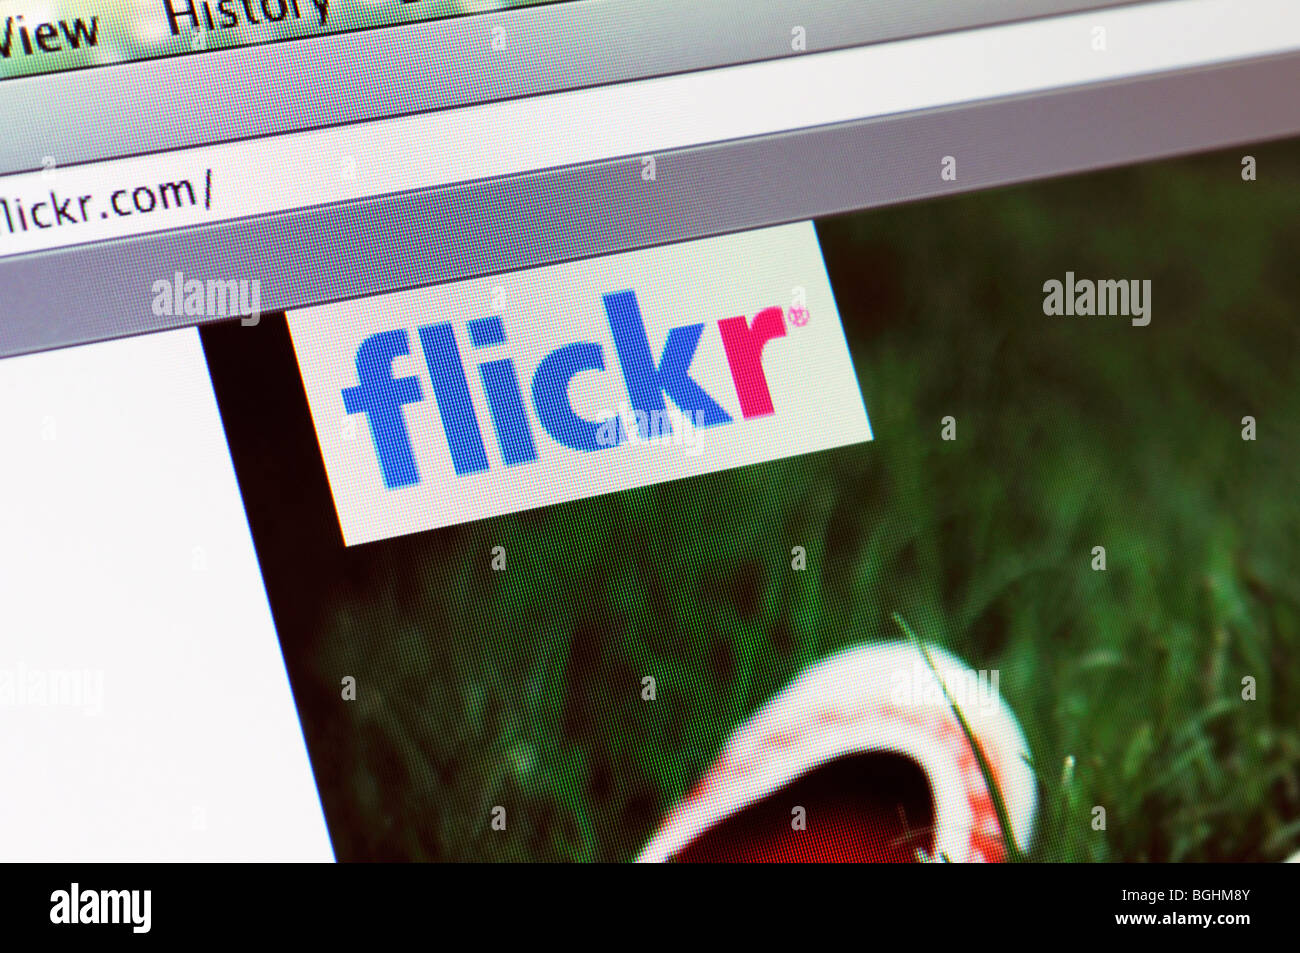 Flickr Photo Storage website Stock Photo